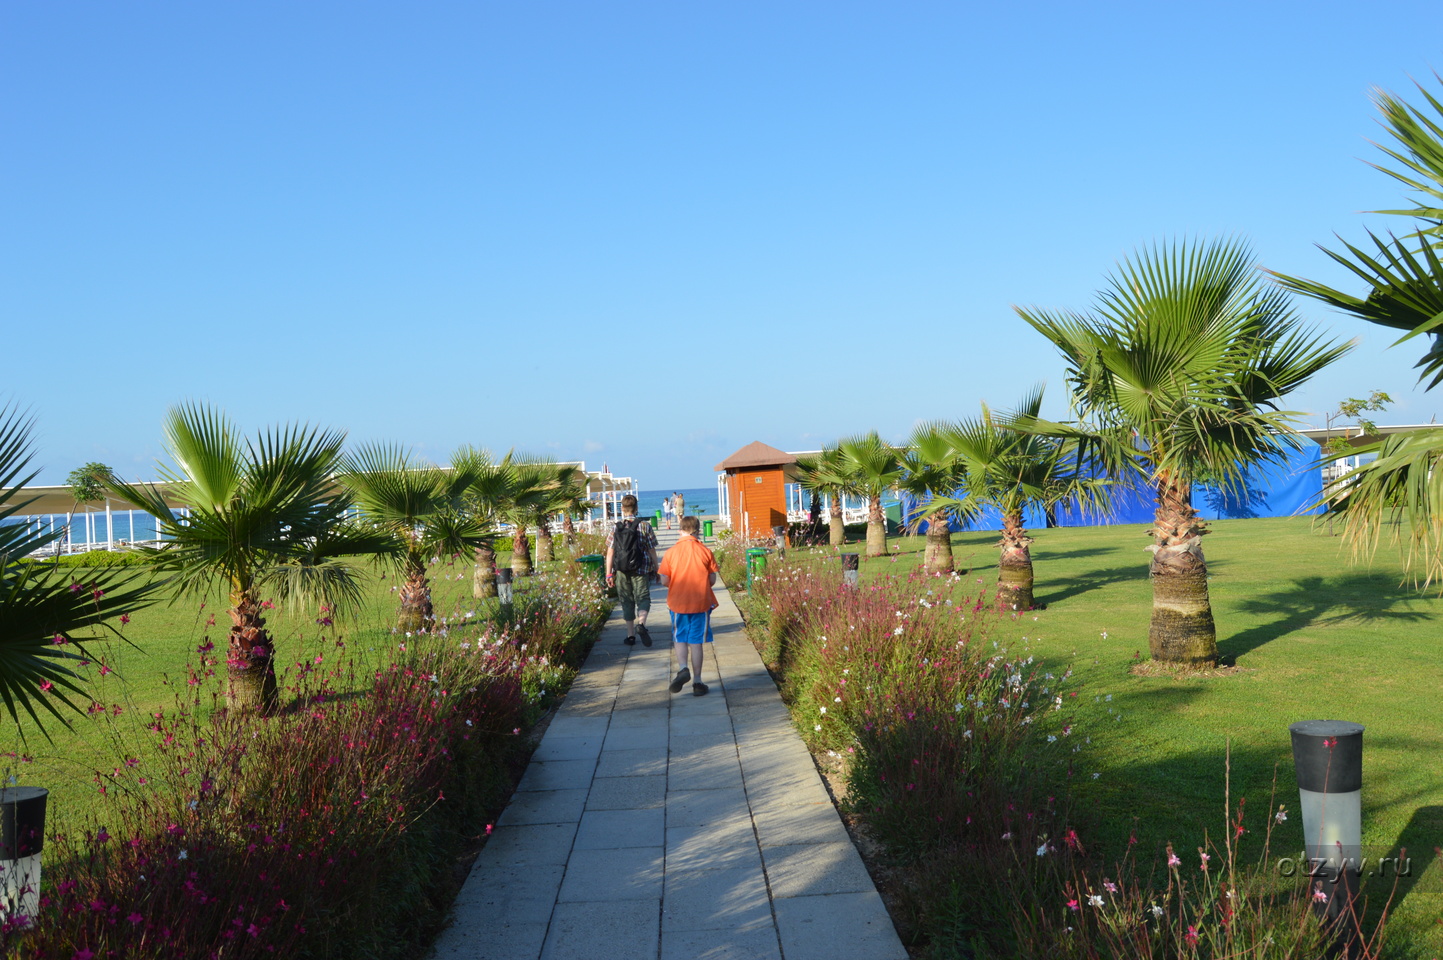 Sunis Elita Beach Resort Hotel & SPA